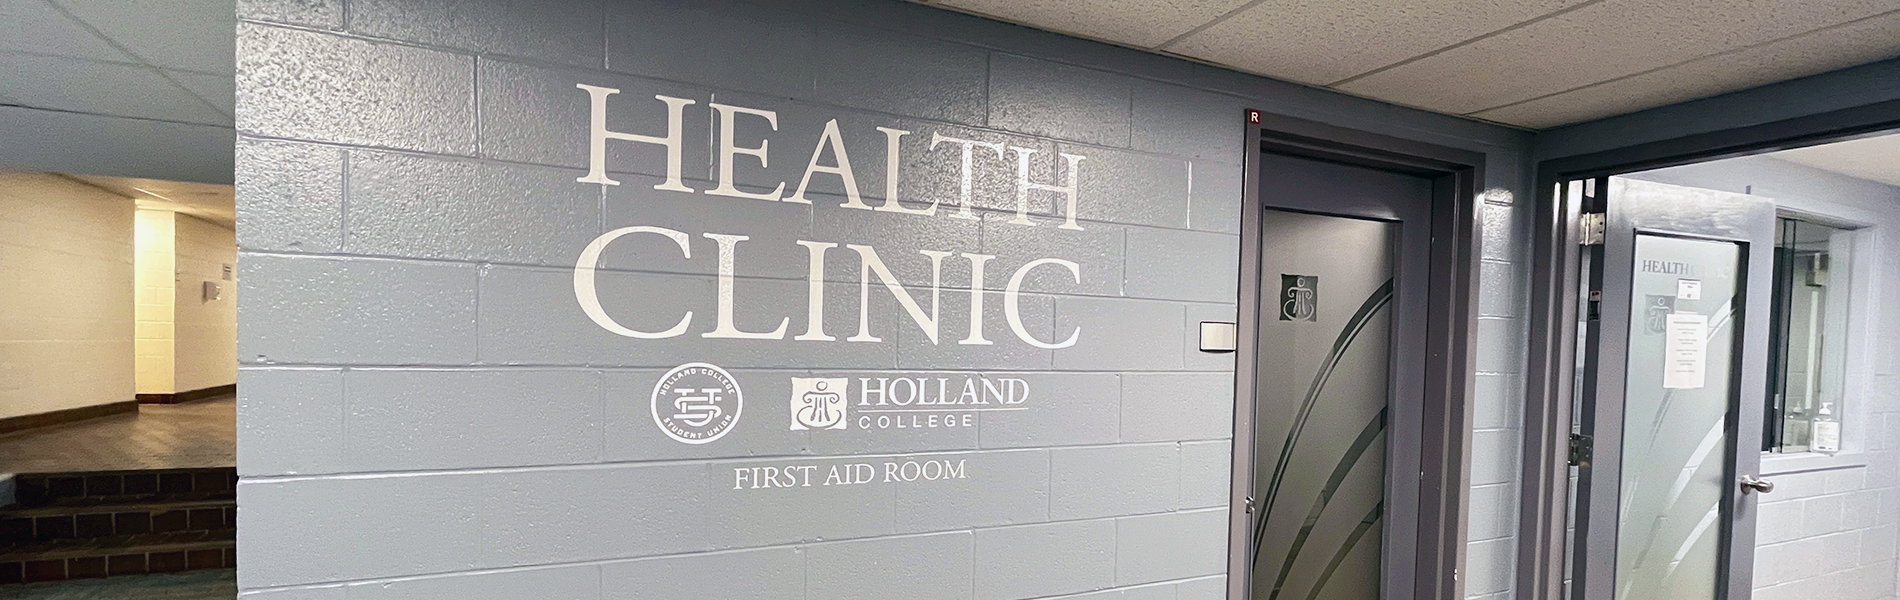 Health Clinics banner image